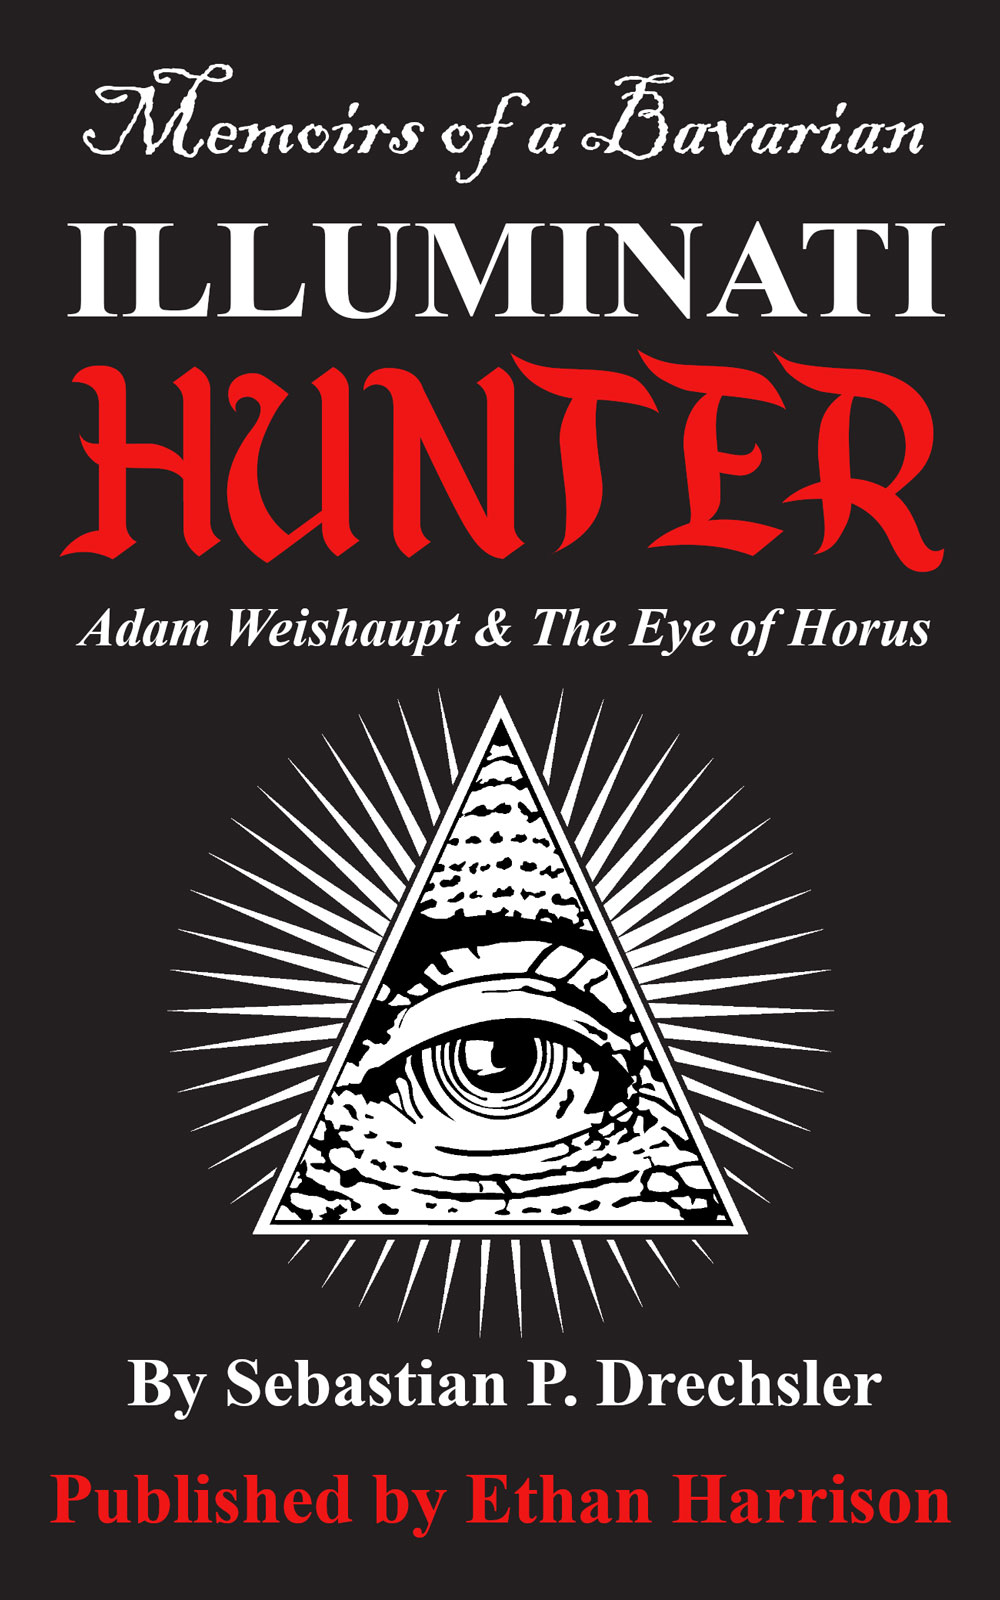 Illuminati Hunter